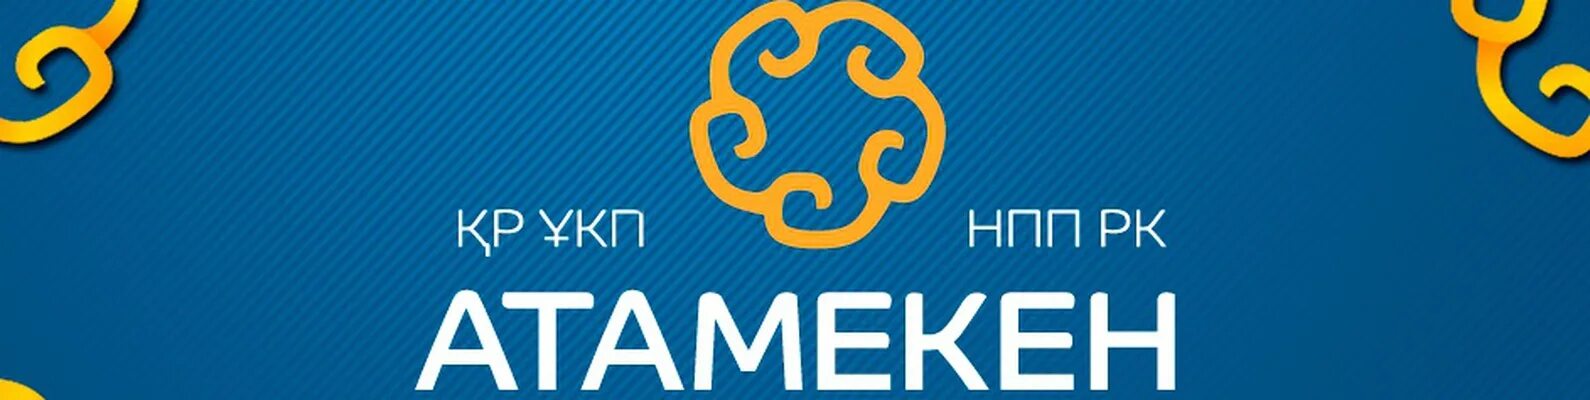 Национальная палата казахстан. Атамекен палата предпринимателей. Атамекен эмблема. Национальная палата предпринимателей «Атамекен» logo. НПП Атамекен логотип.